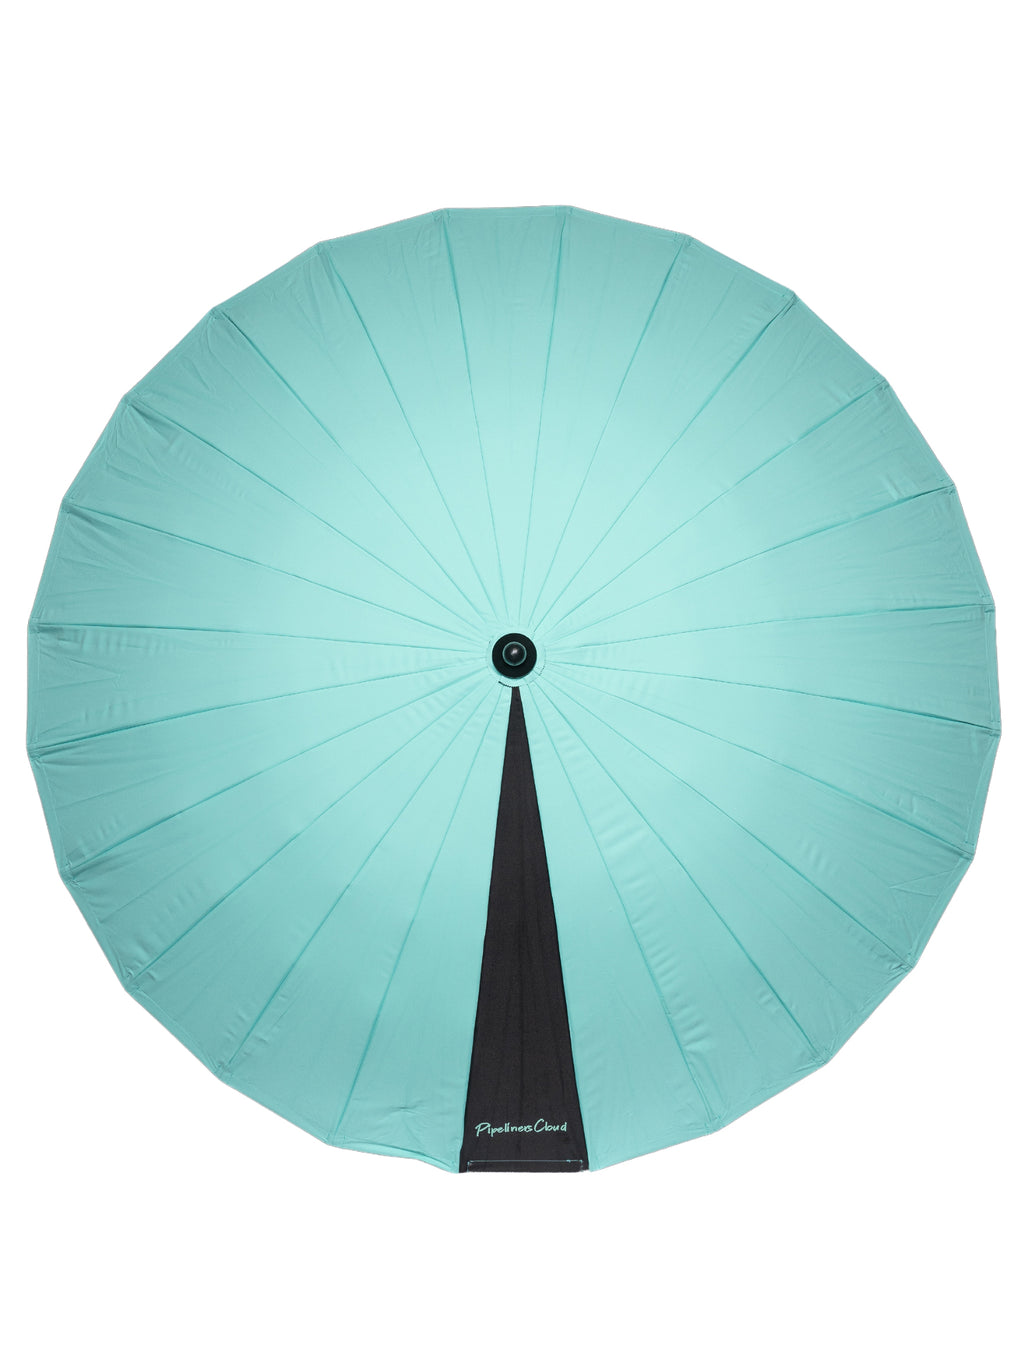 Yeti Teal 8' Pipeliners Cloud Umbrella and Slam Pole Holder